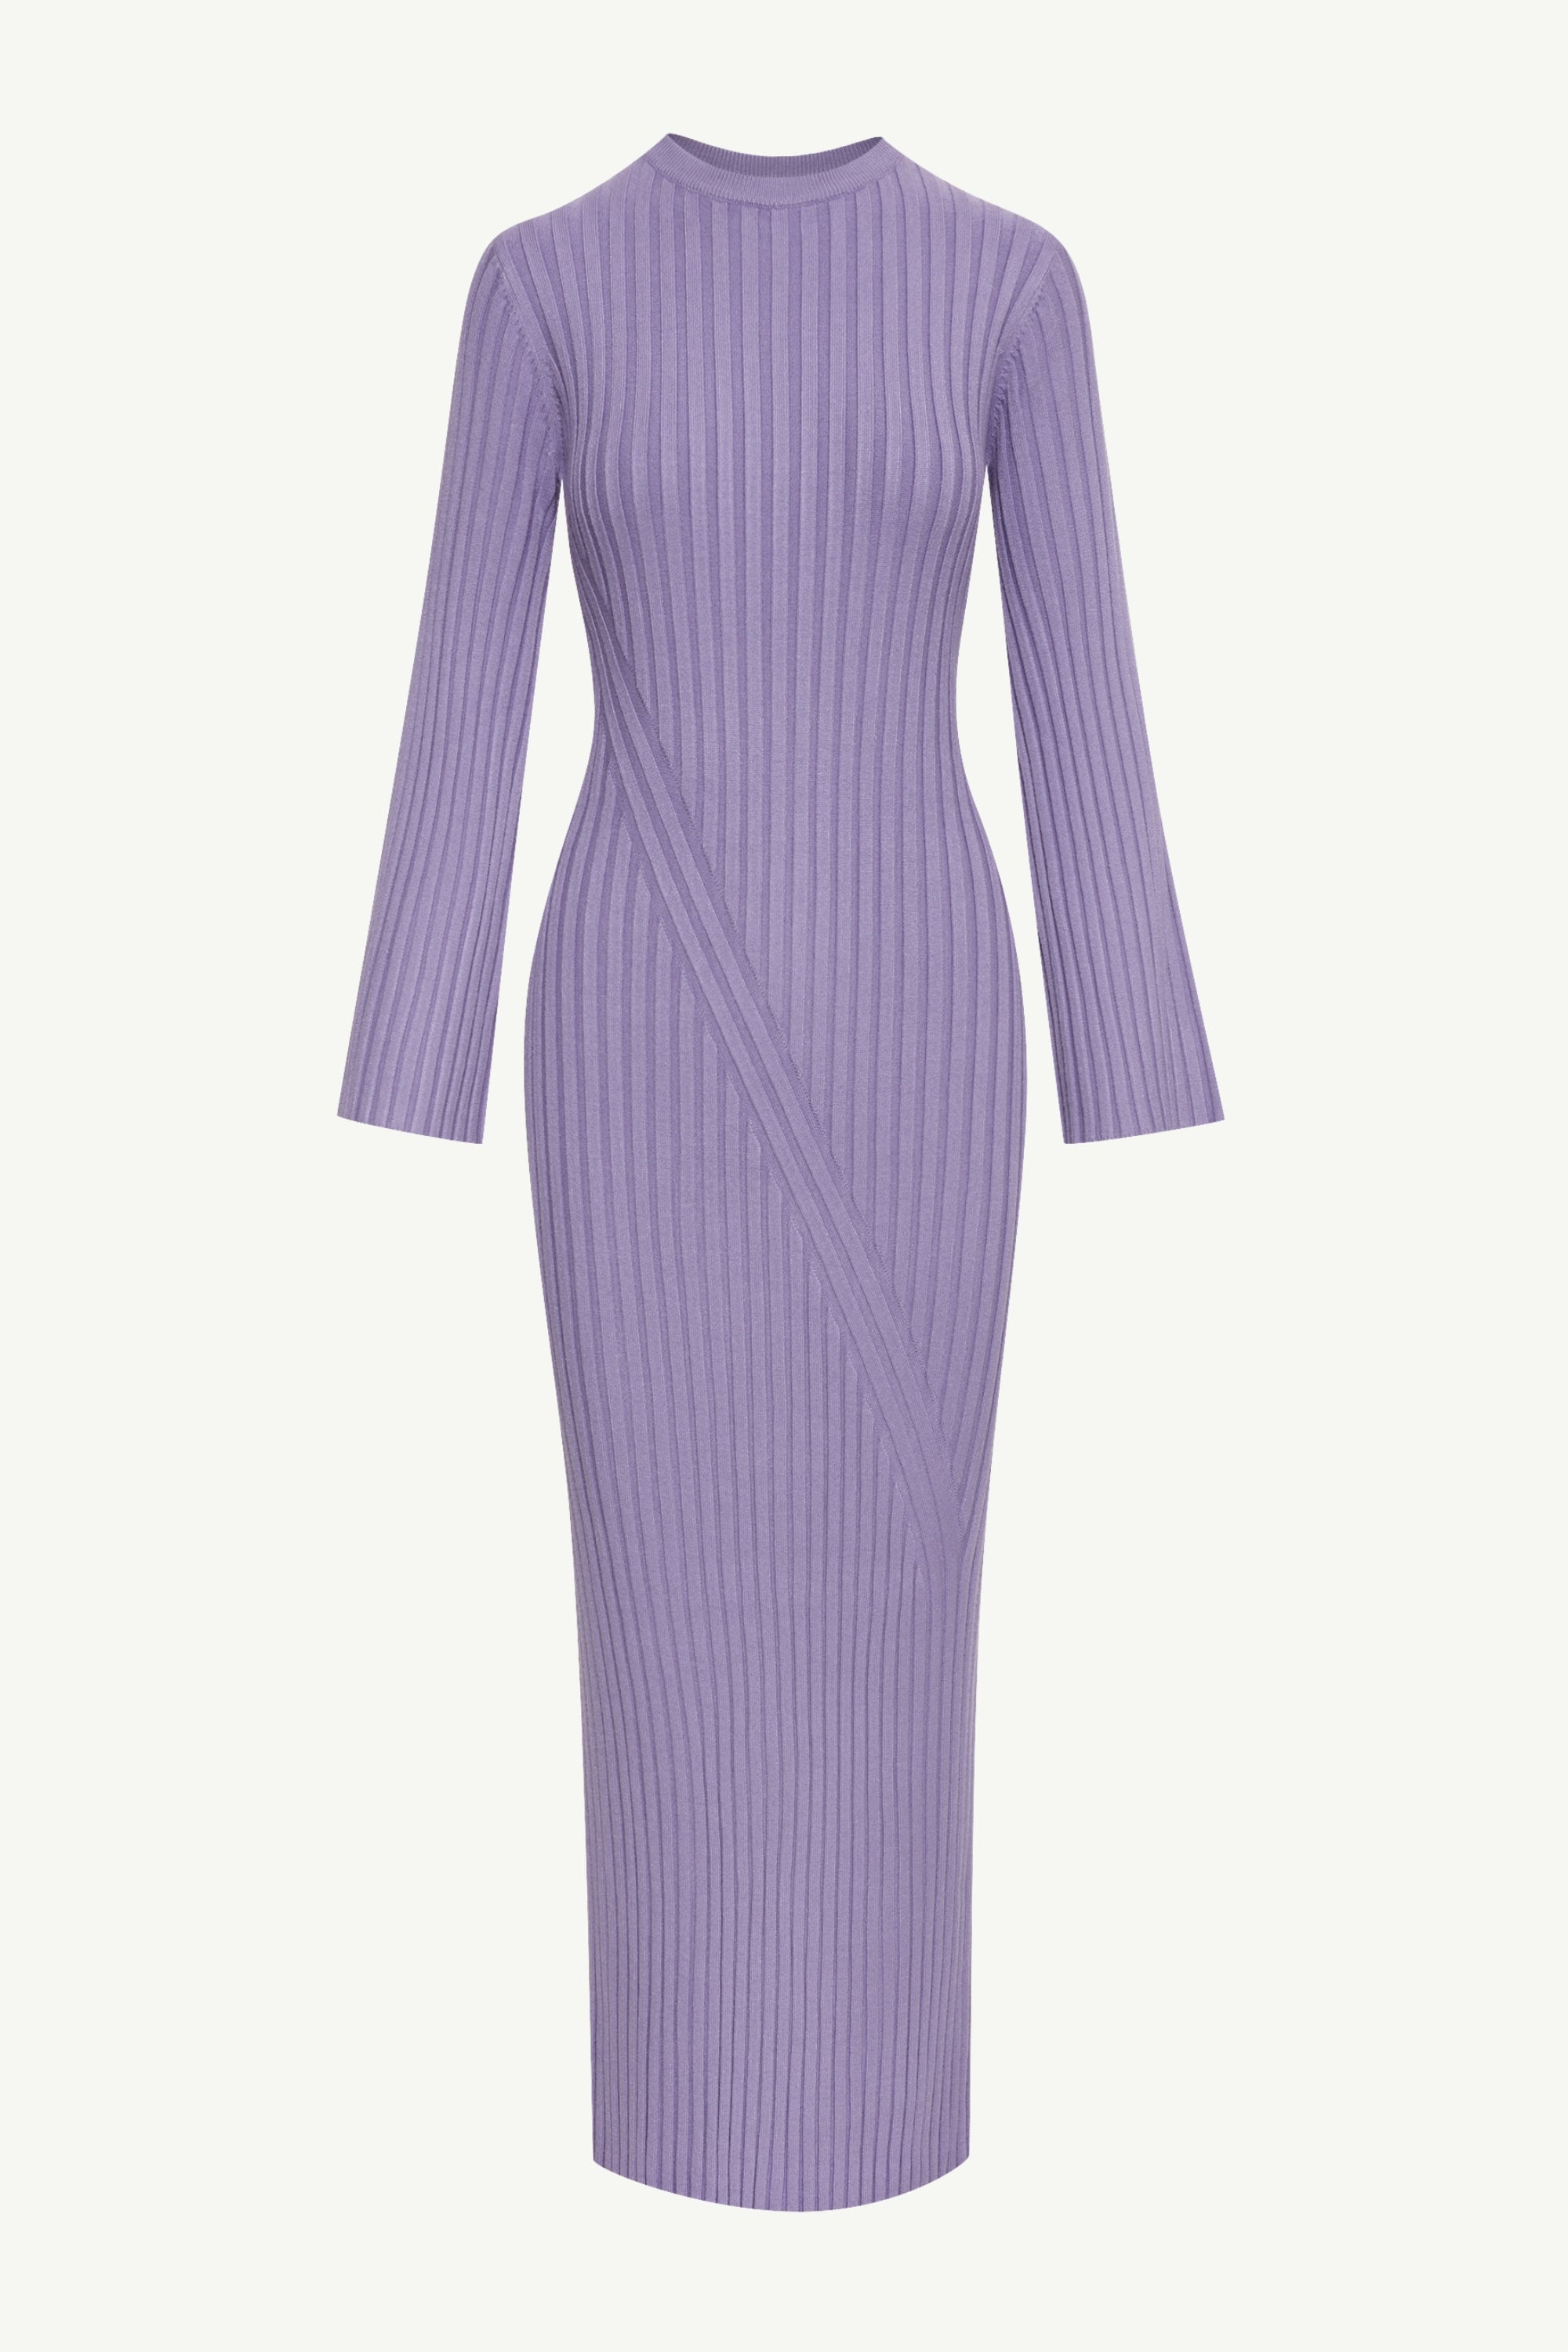 Freedom Bralette Maxi Dress (Lavender) – Sunday's Best Boutique